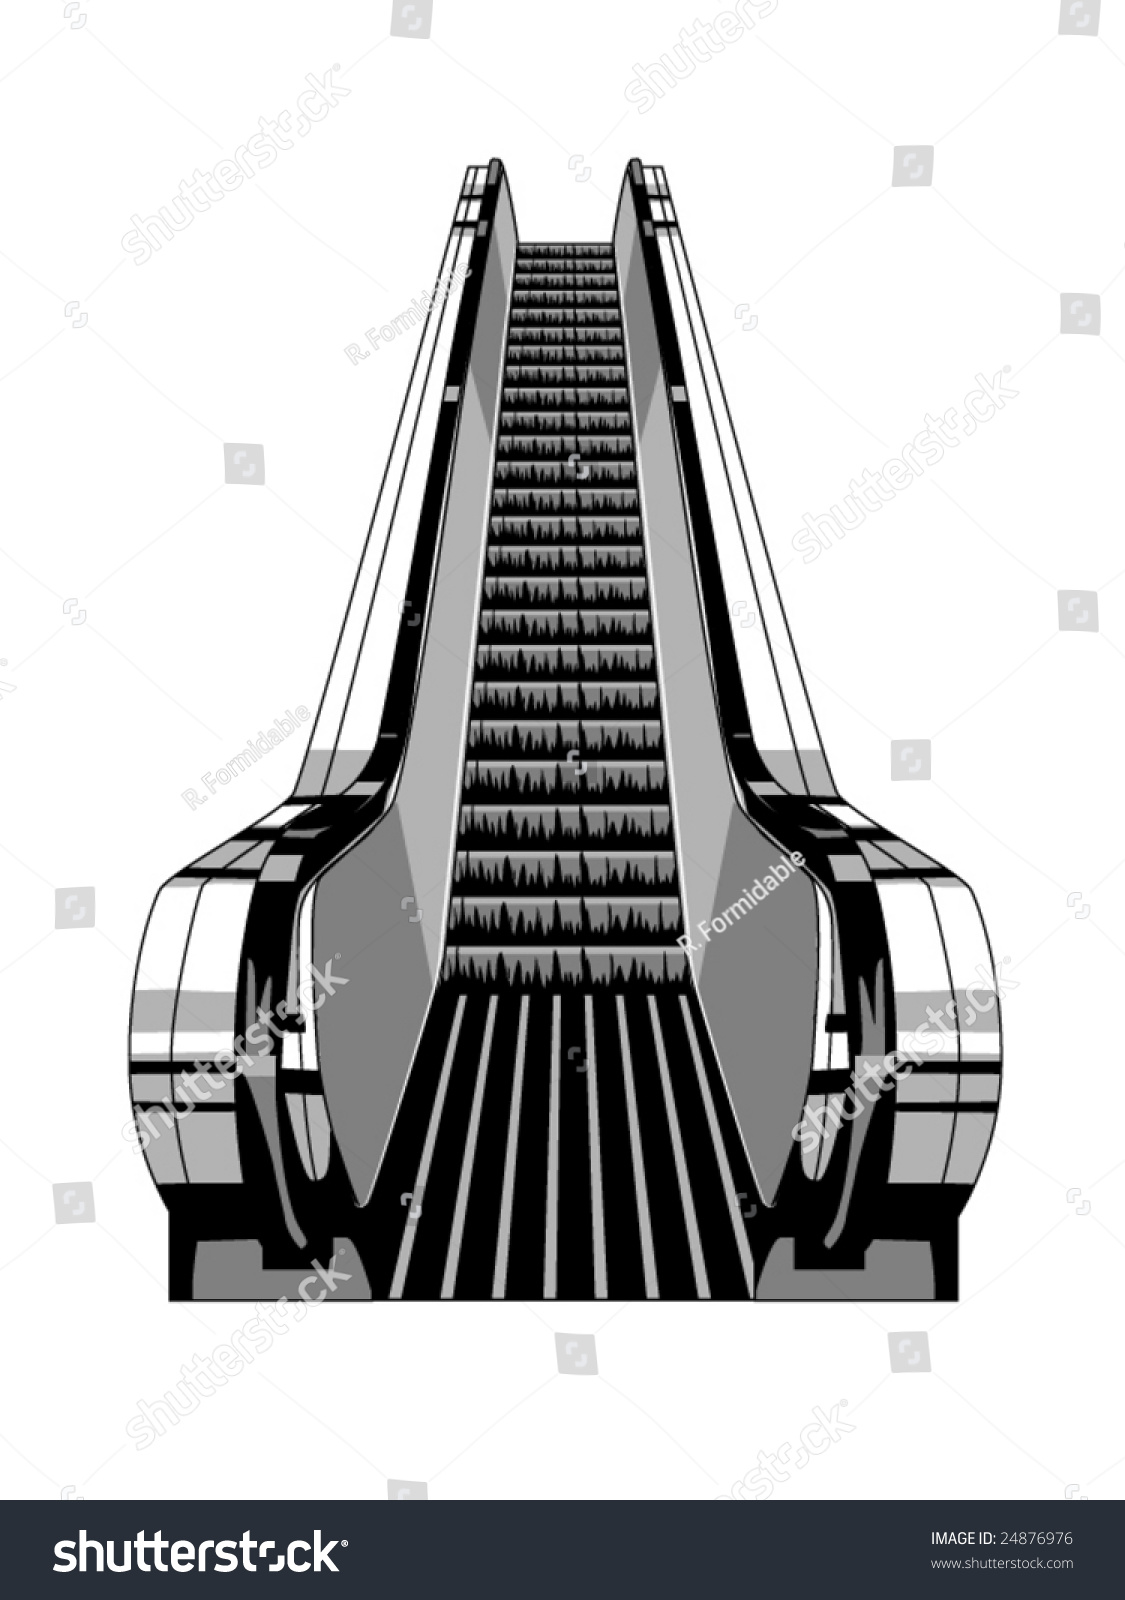 clipart of escalator - photo #31